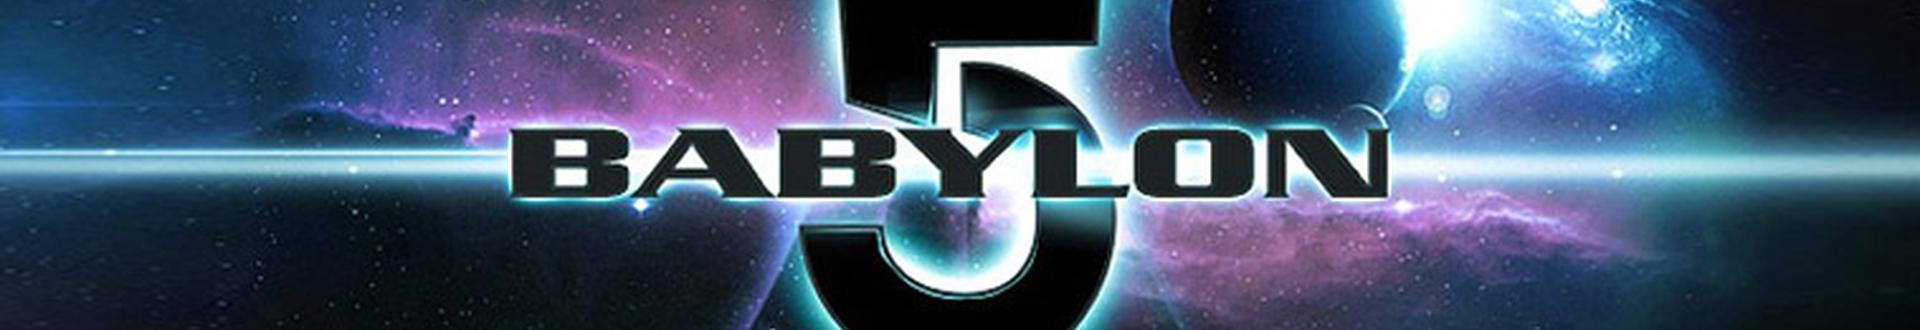 Image illustrative de Babylon 5